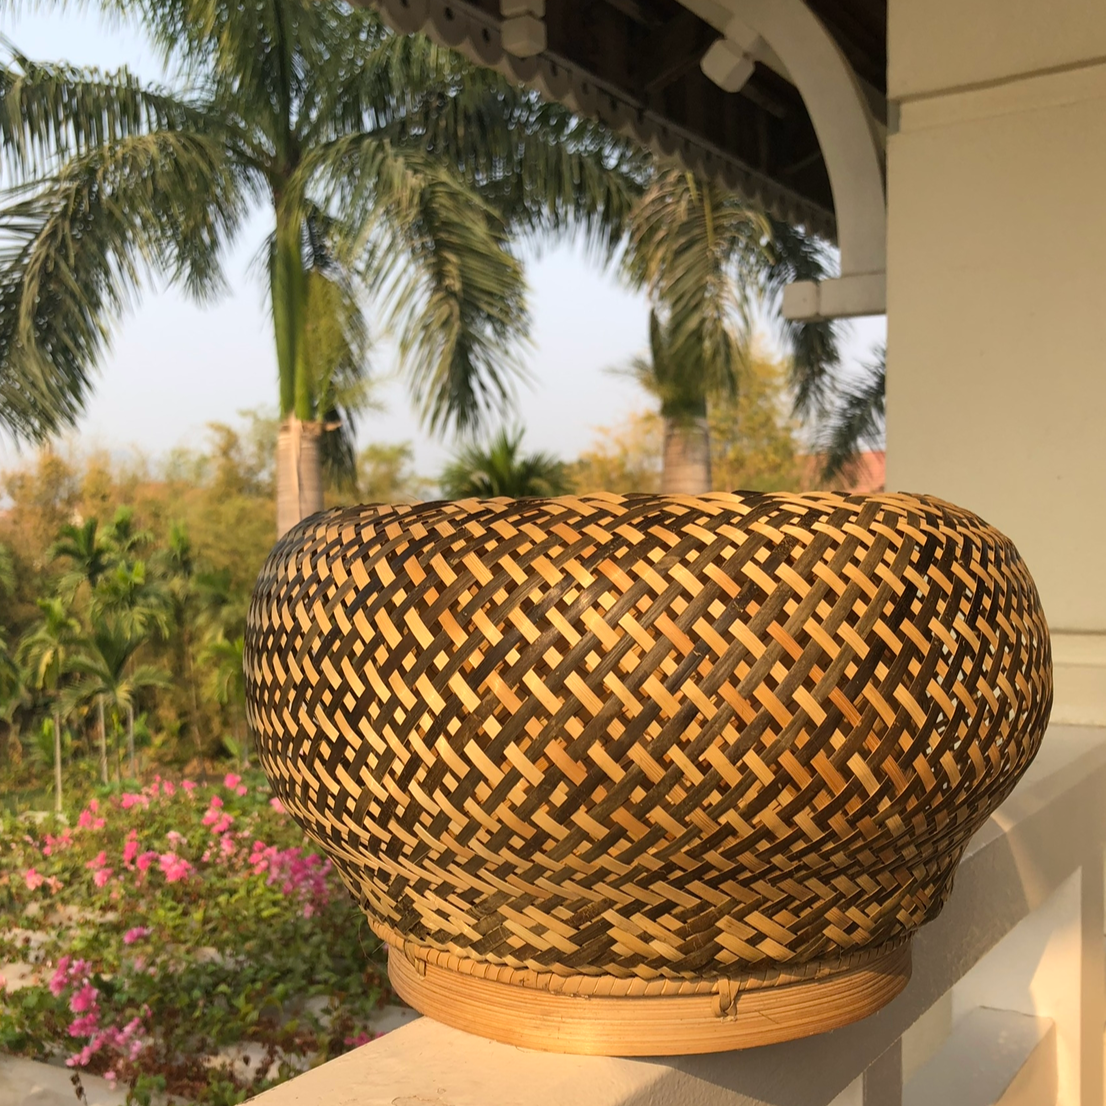 Palm plant in Laos basket